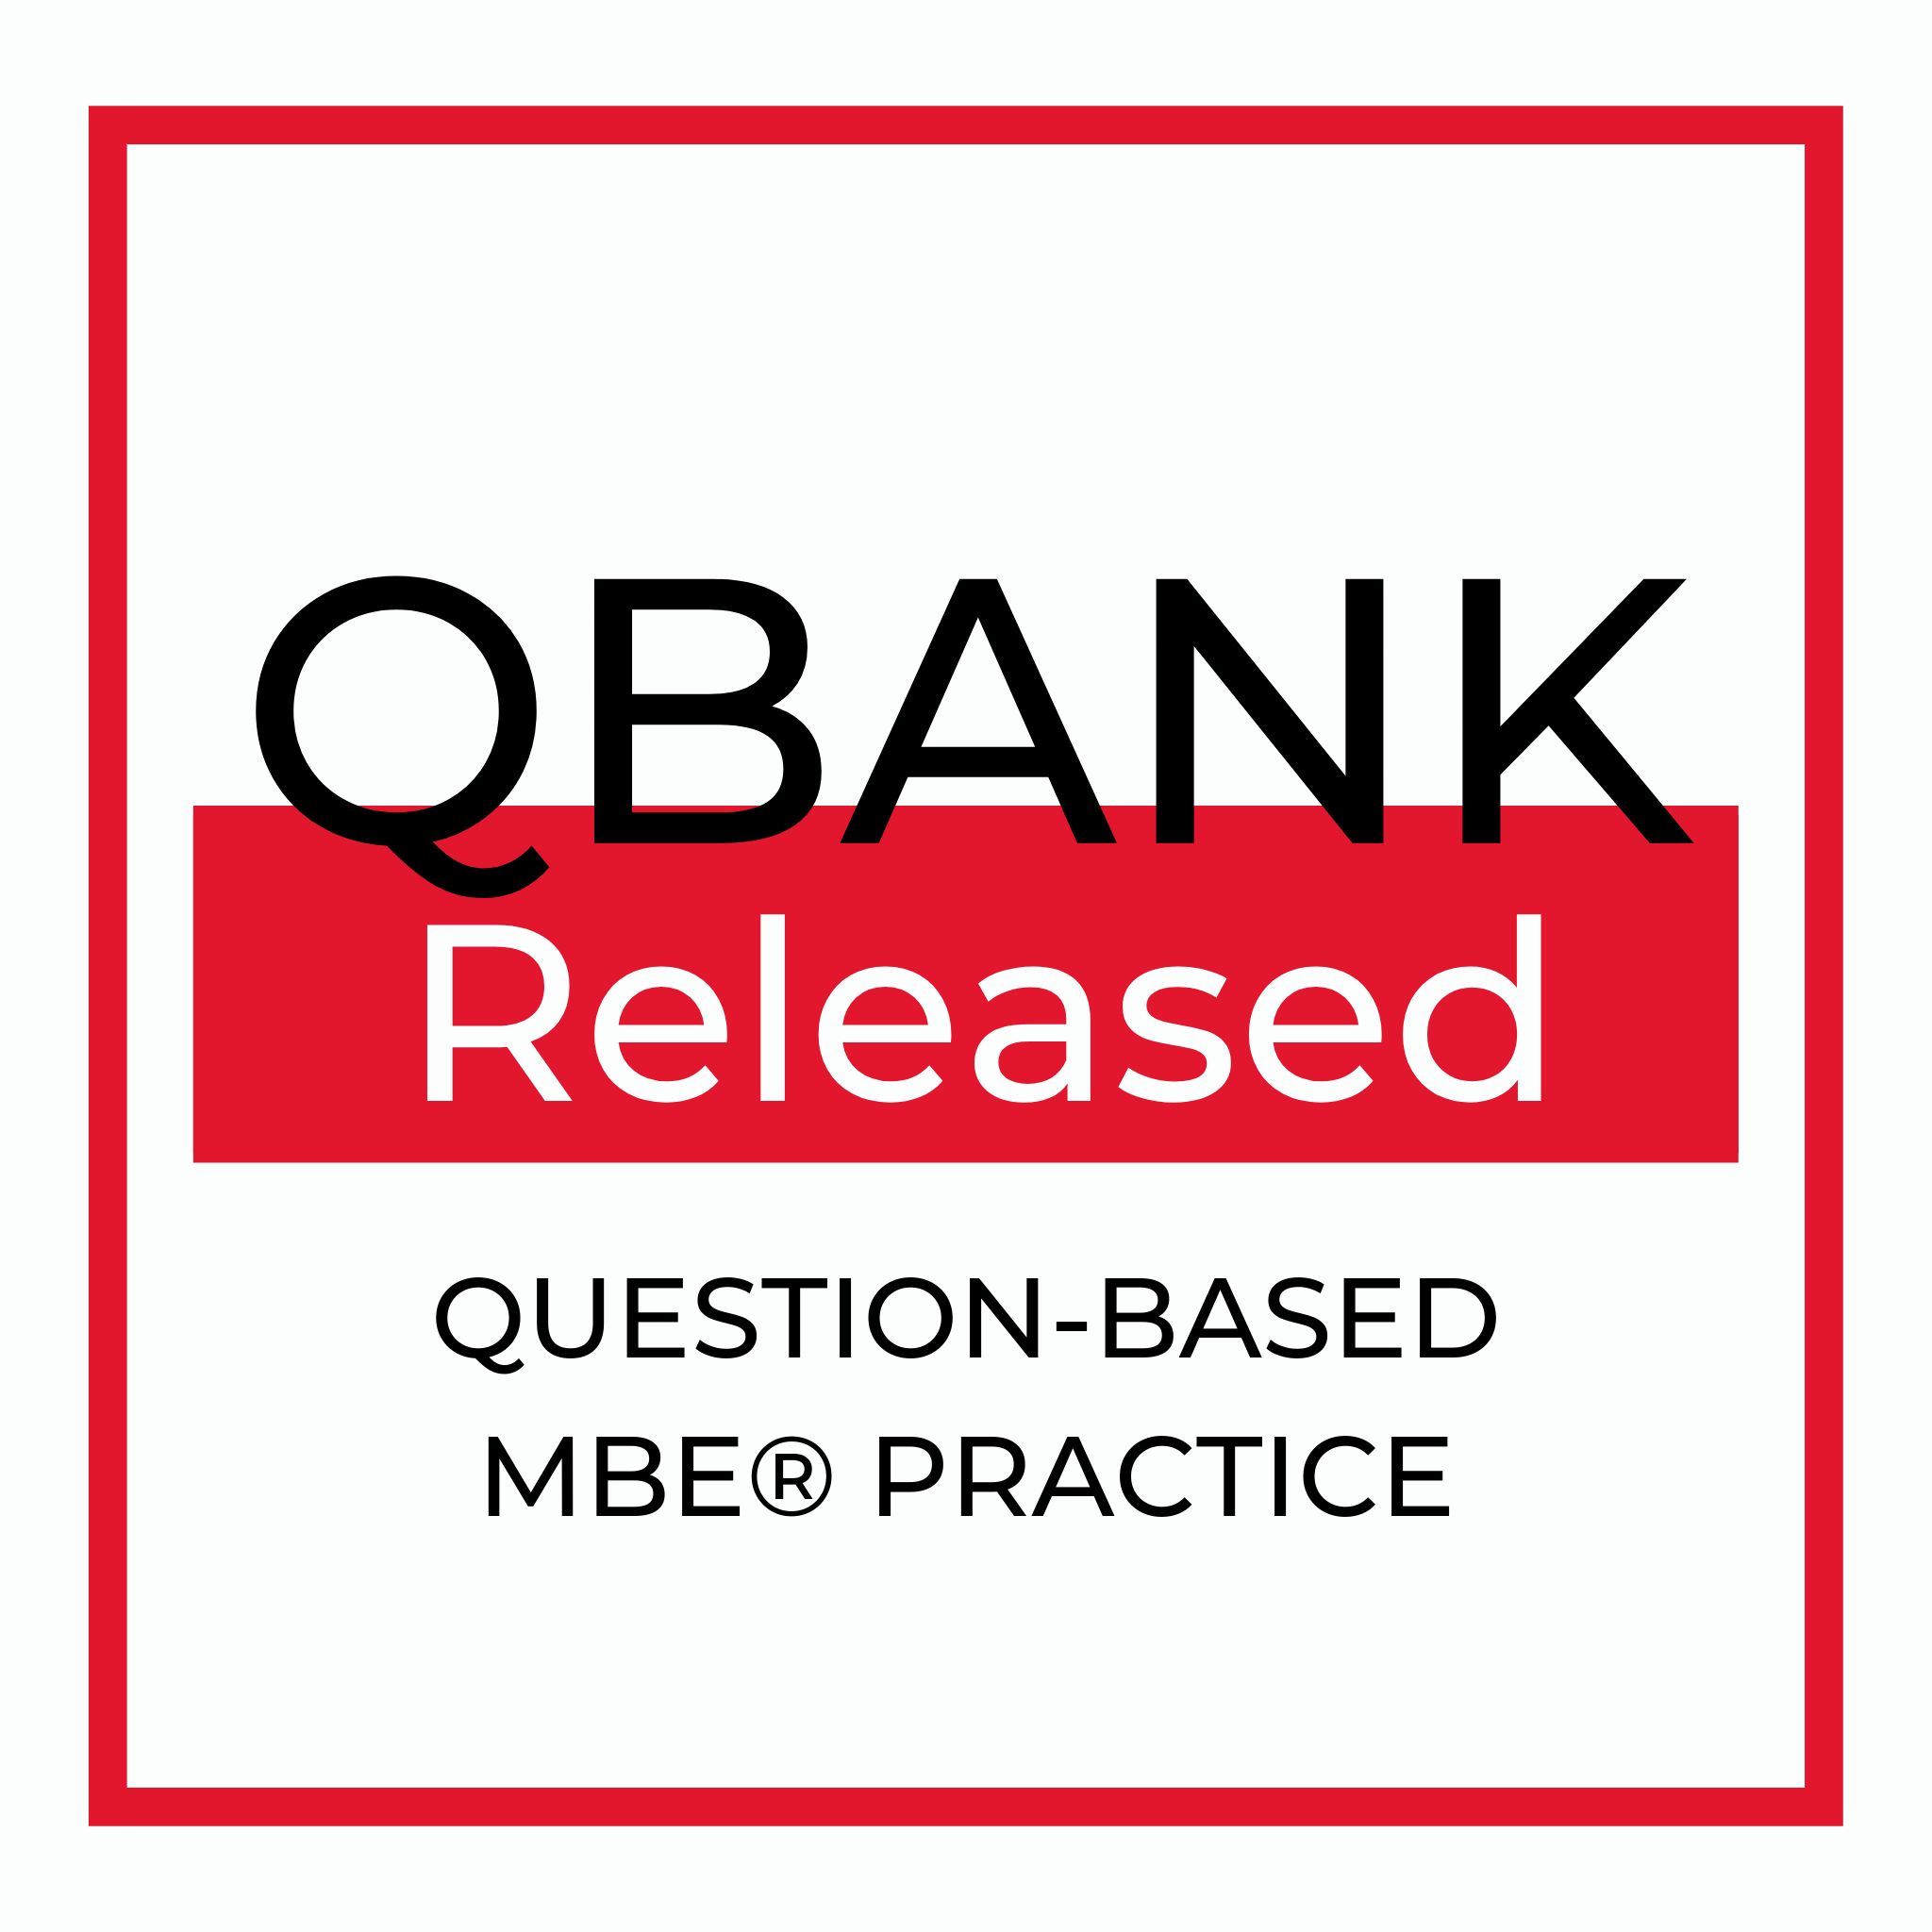 Qbank Released